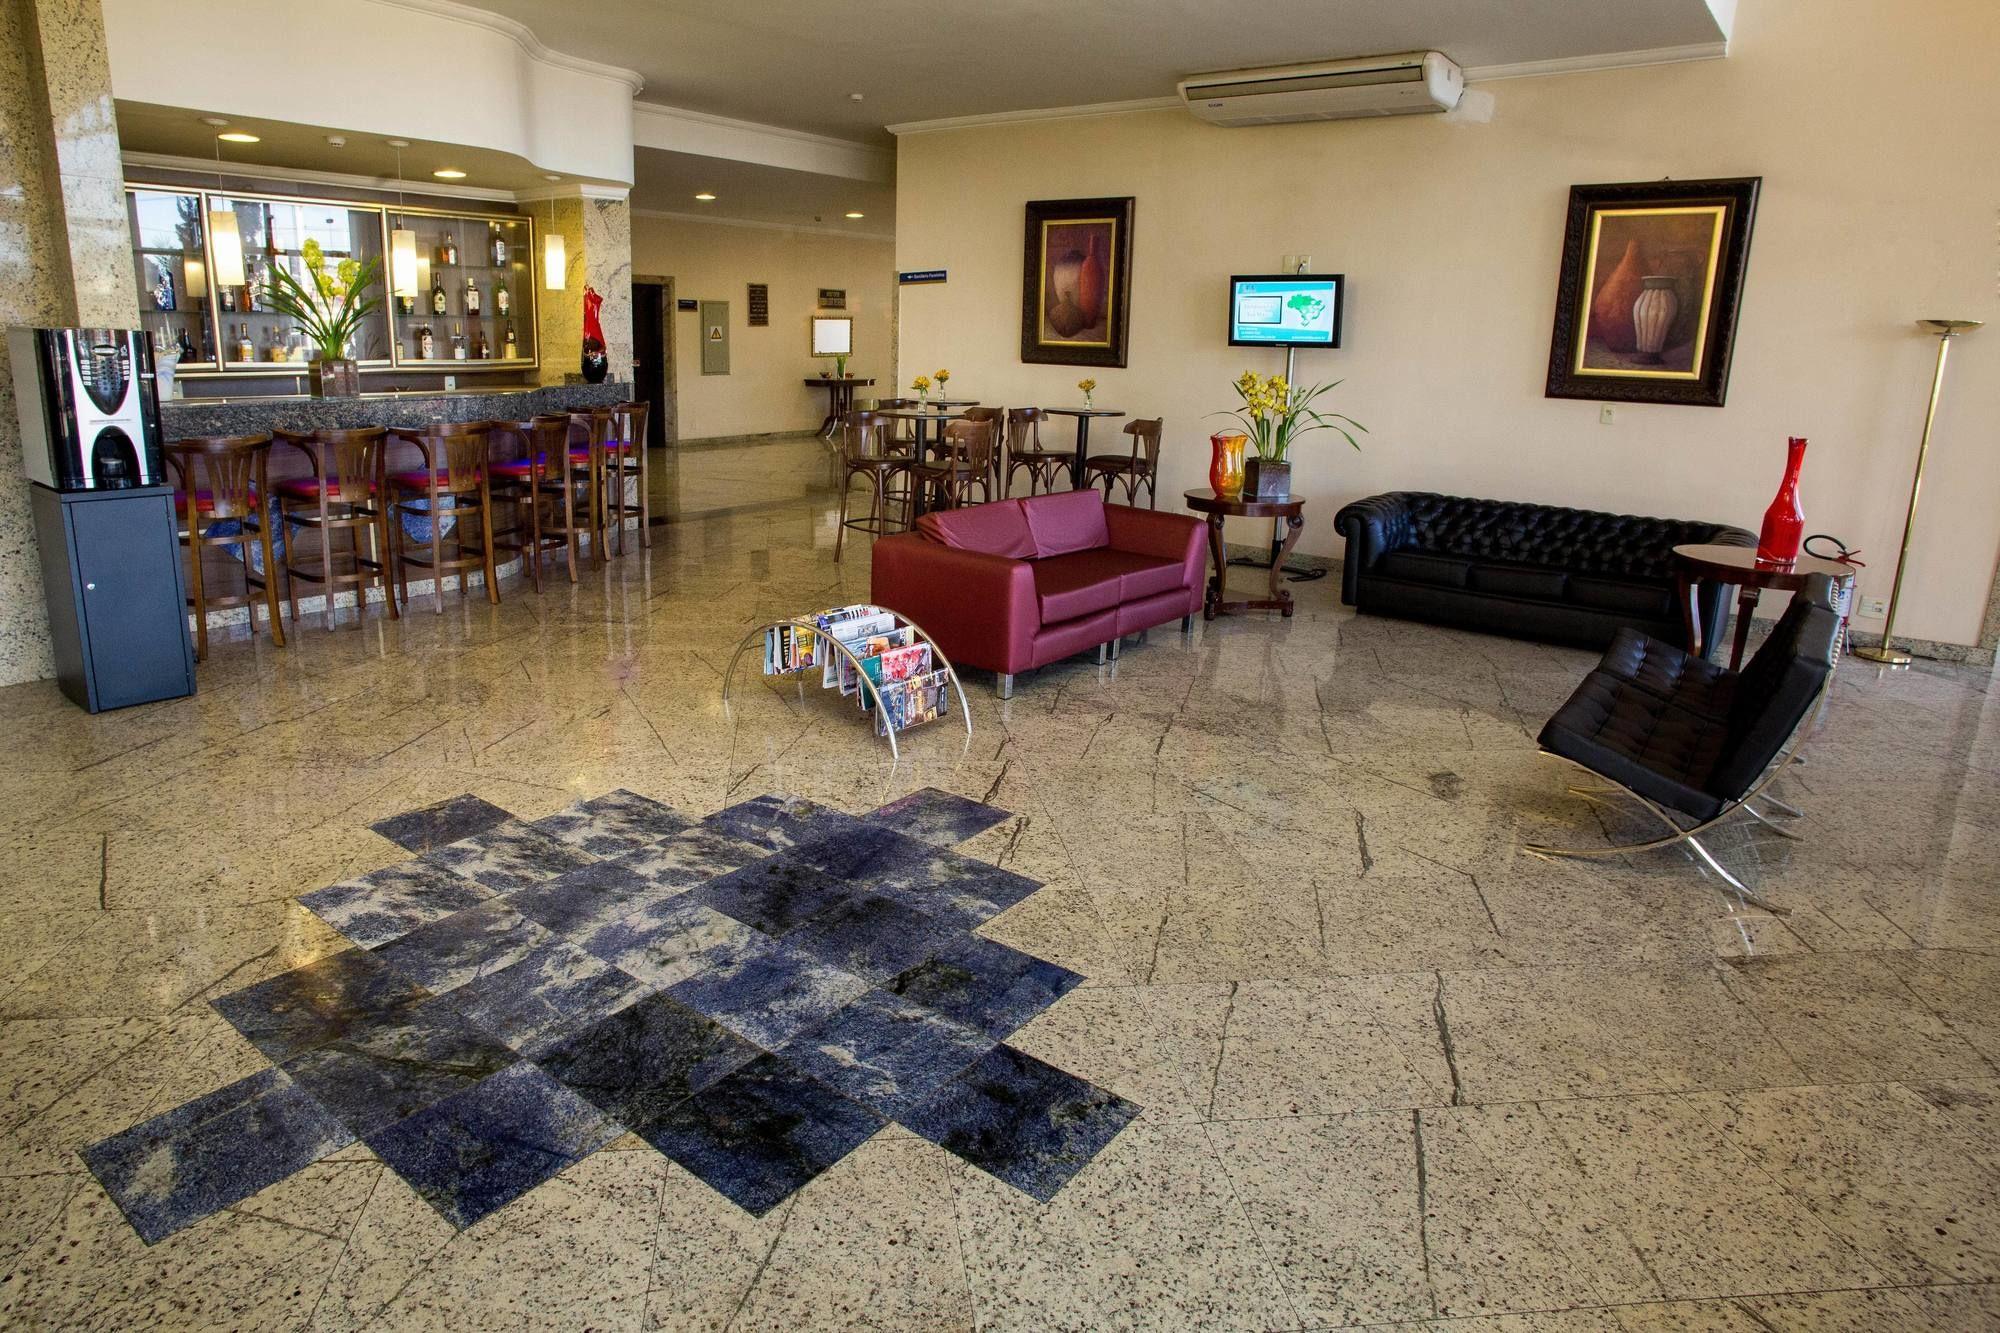 Vista Lobby Dan Inn Campinas Anhanguera